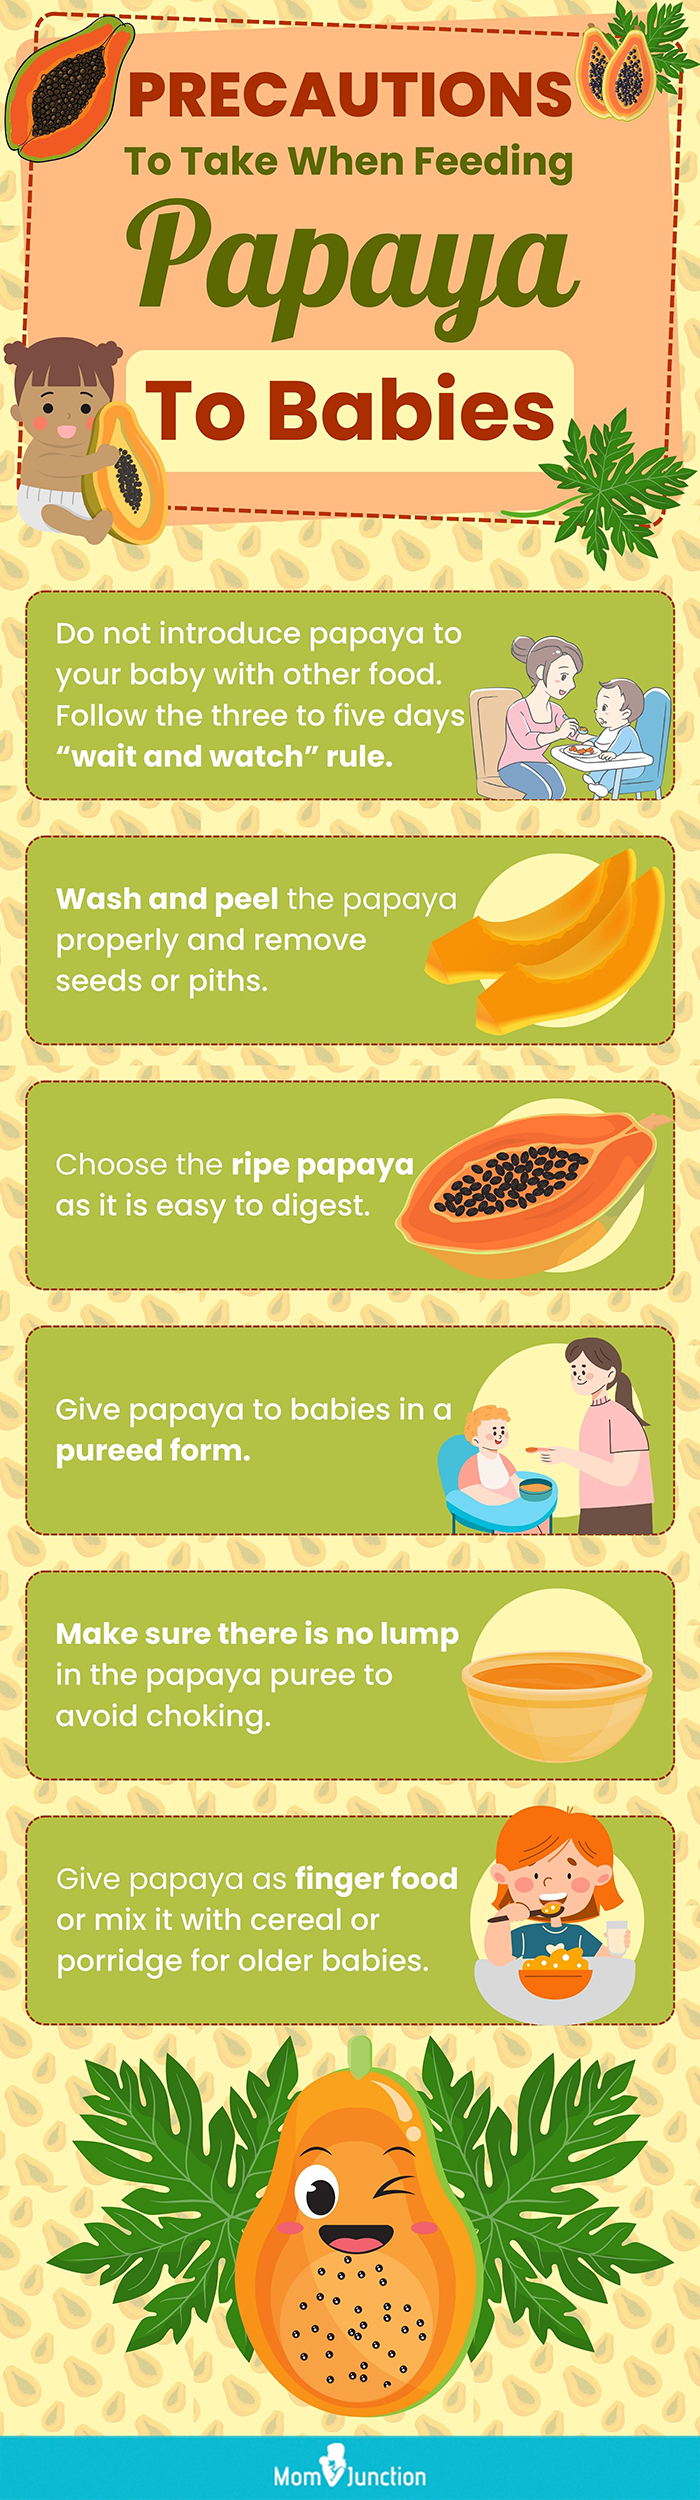 precautions to take when feeding papaya to babies [infographic]